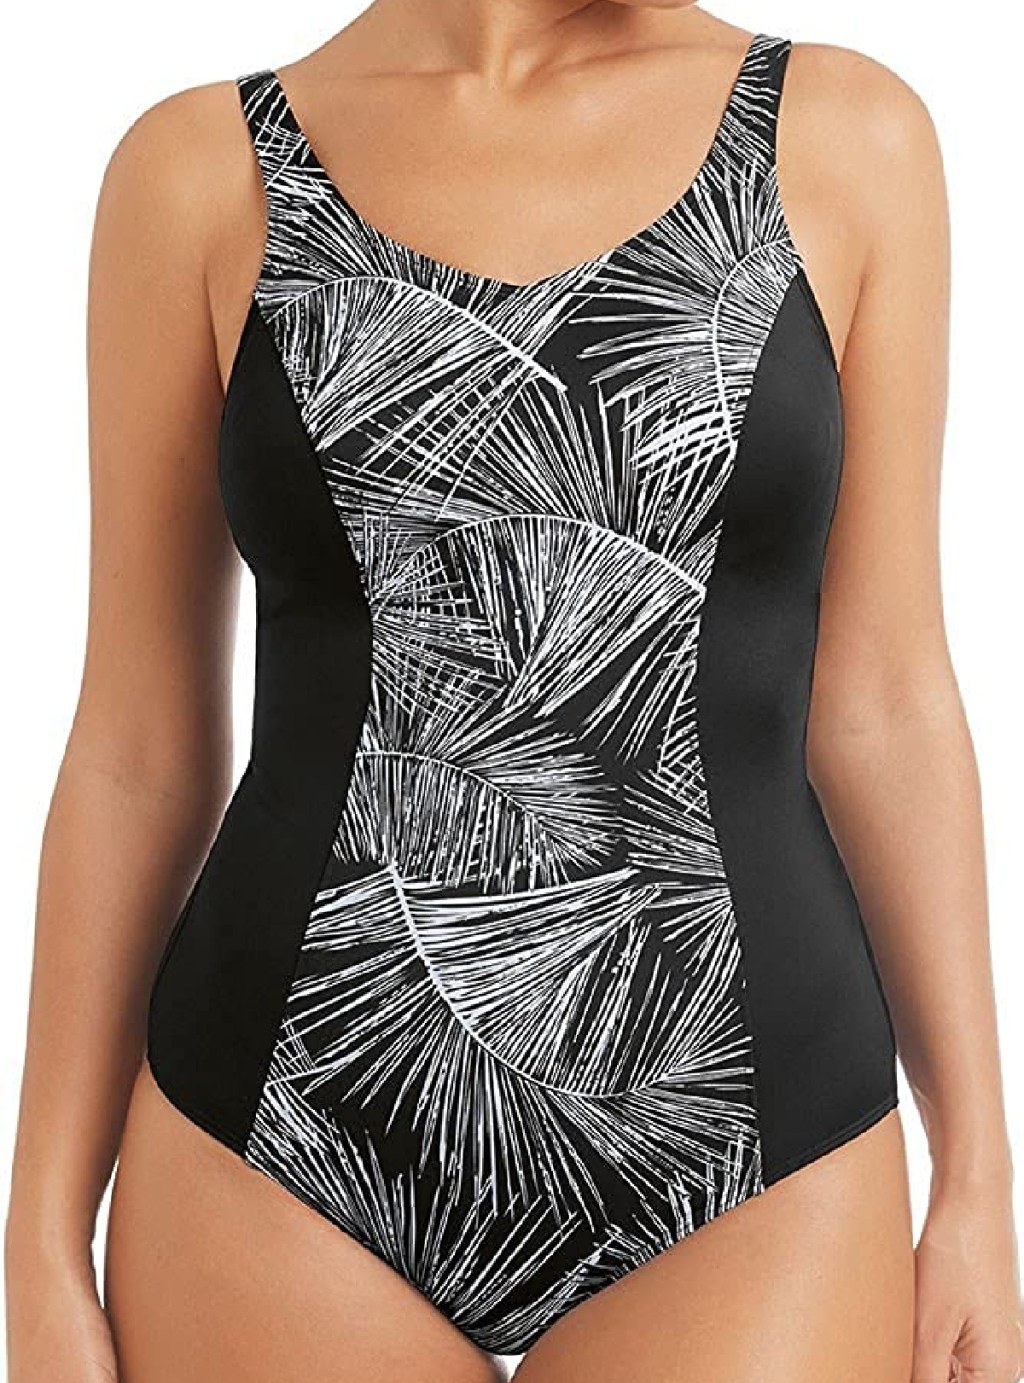 best mastectomy bathing suits - amoena brand palm leaf suit